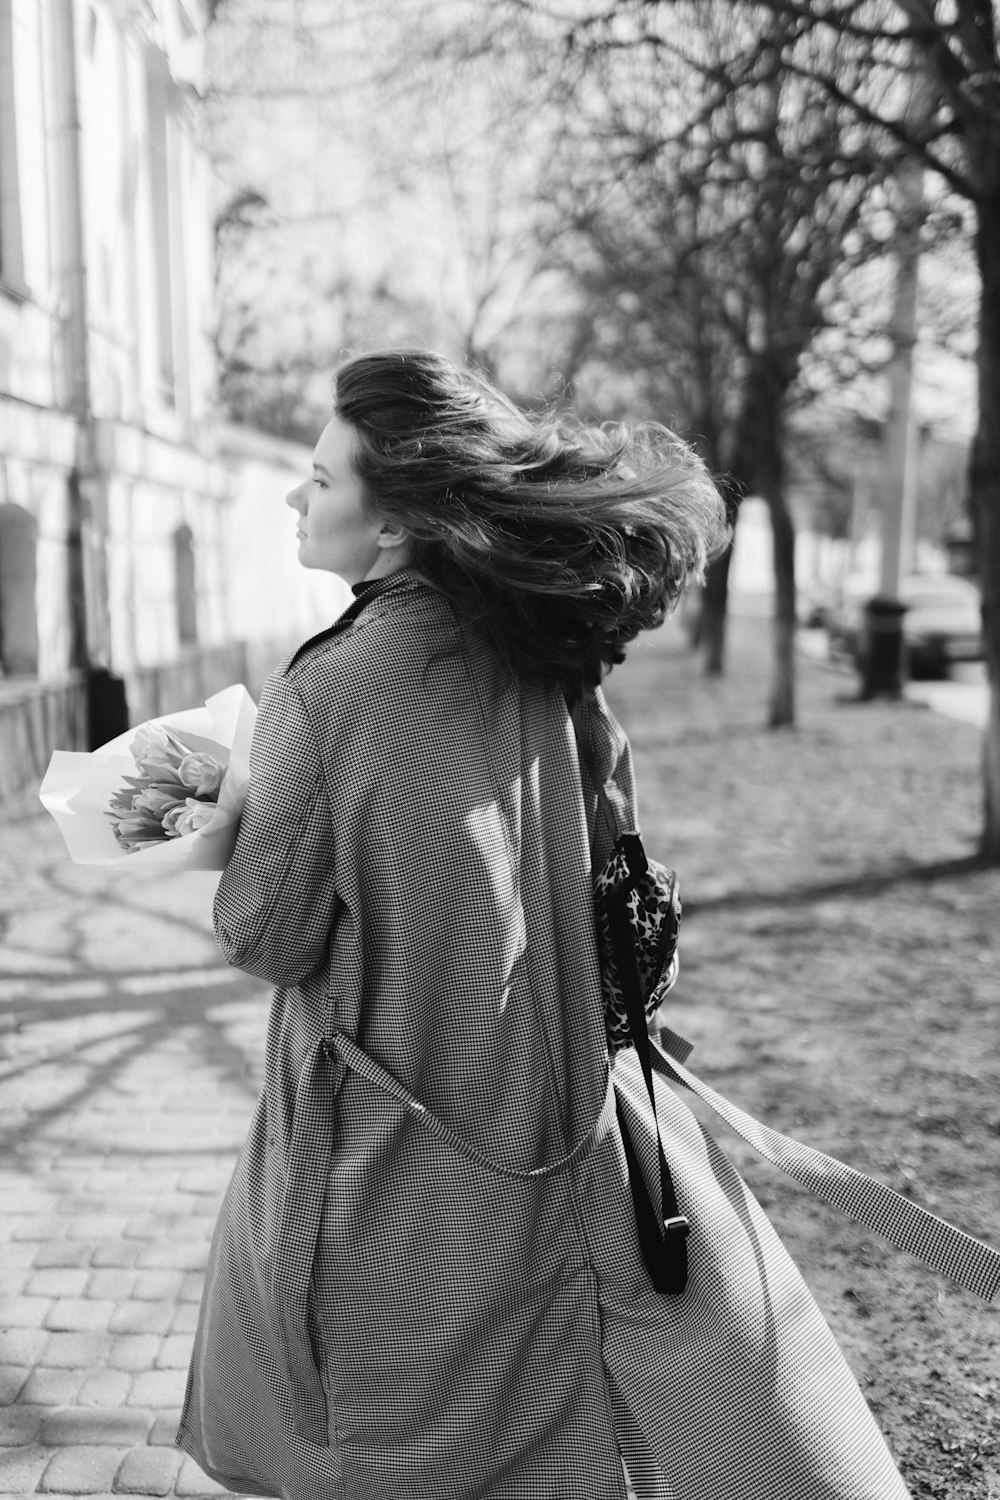 a woman walking down a street holding a bag